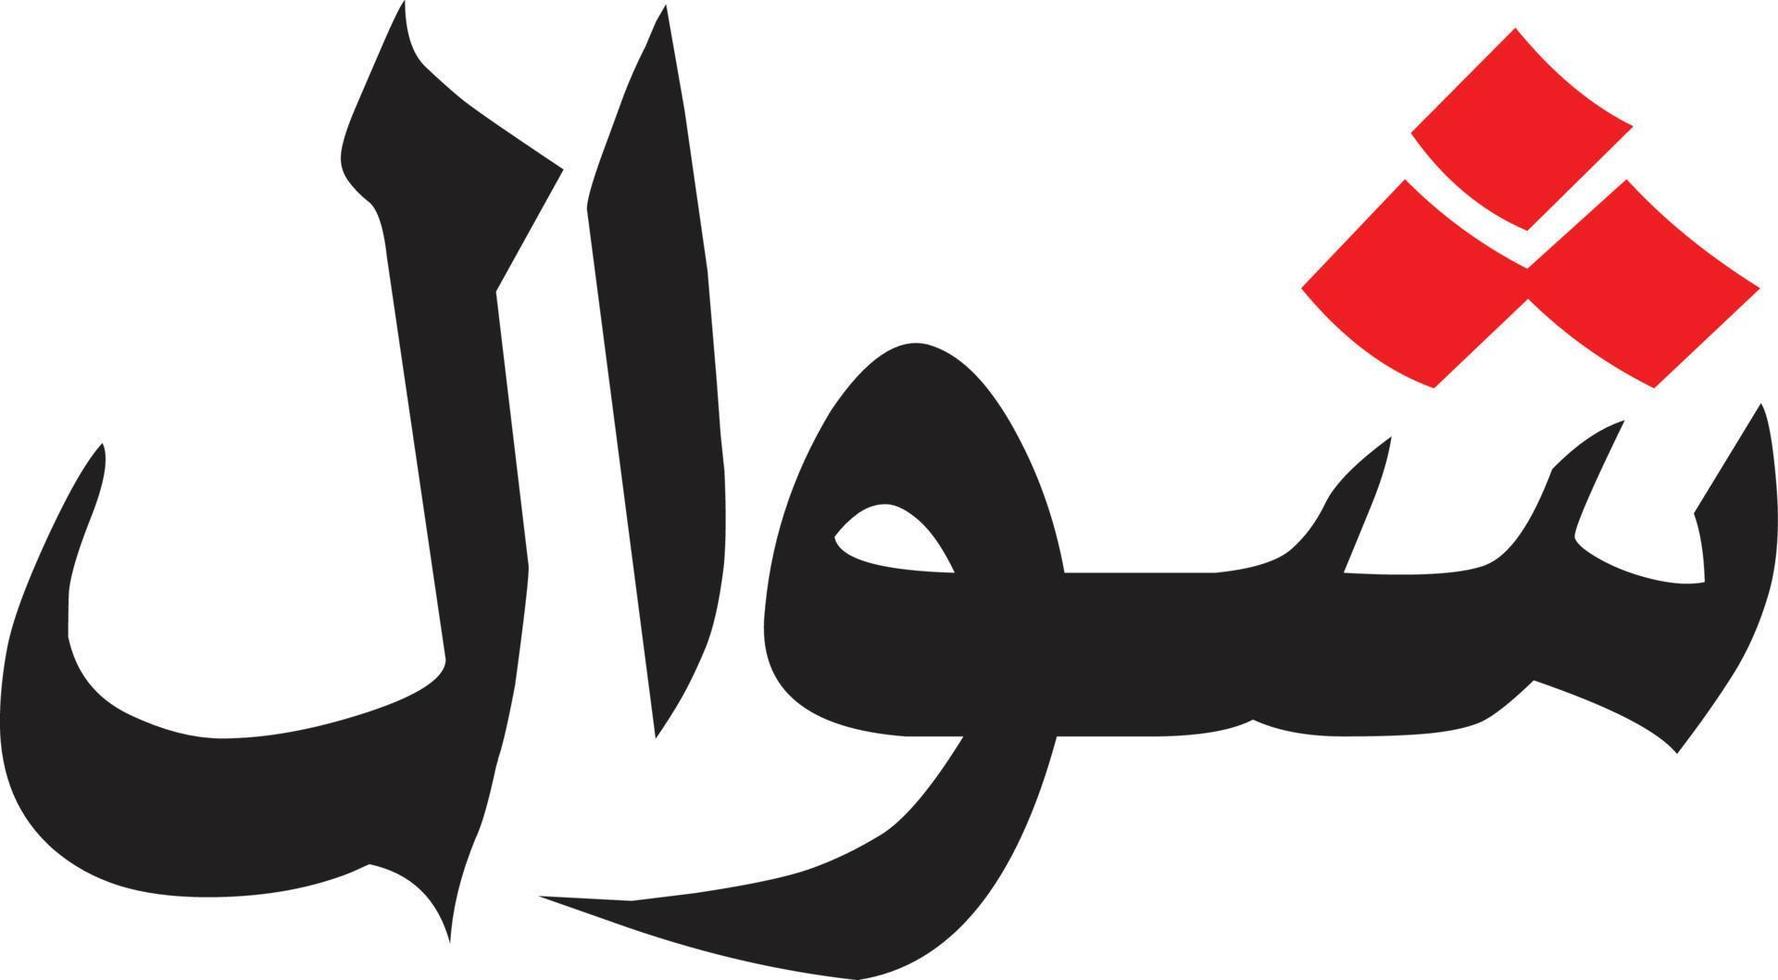 vetor livre de caligrafia urdu islâmica sheewal